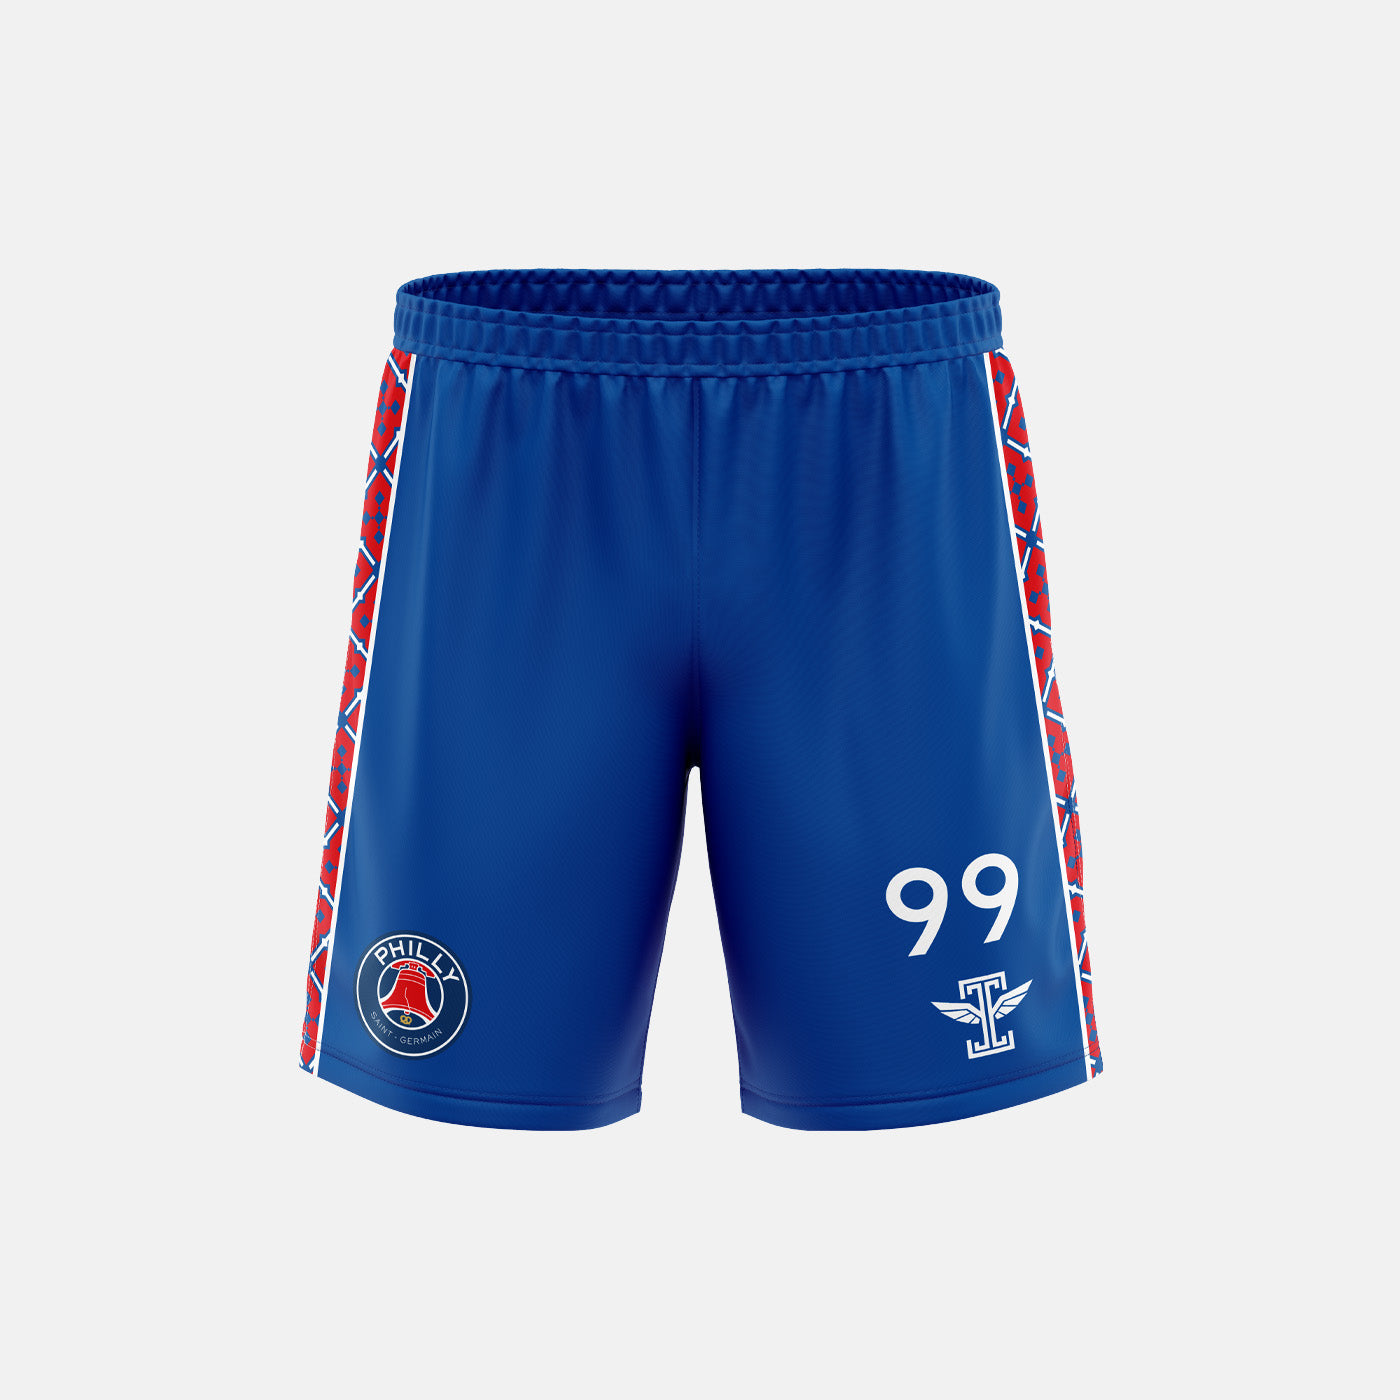 Philly Saint-Germain Blue Shorts